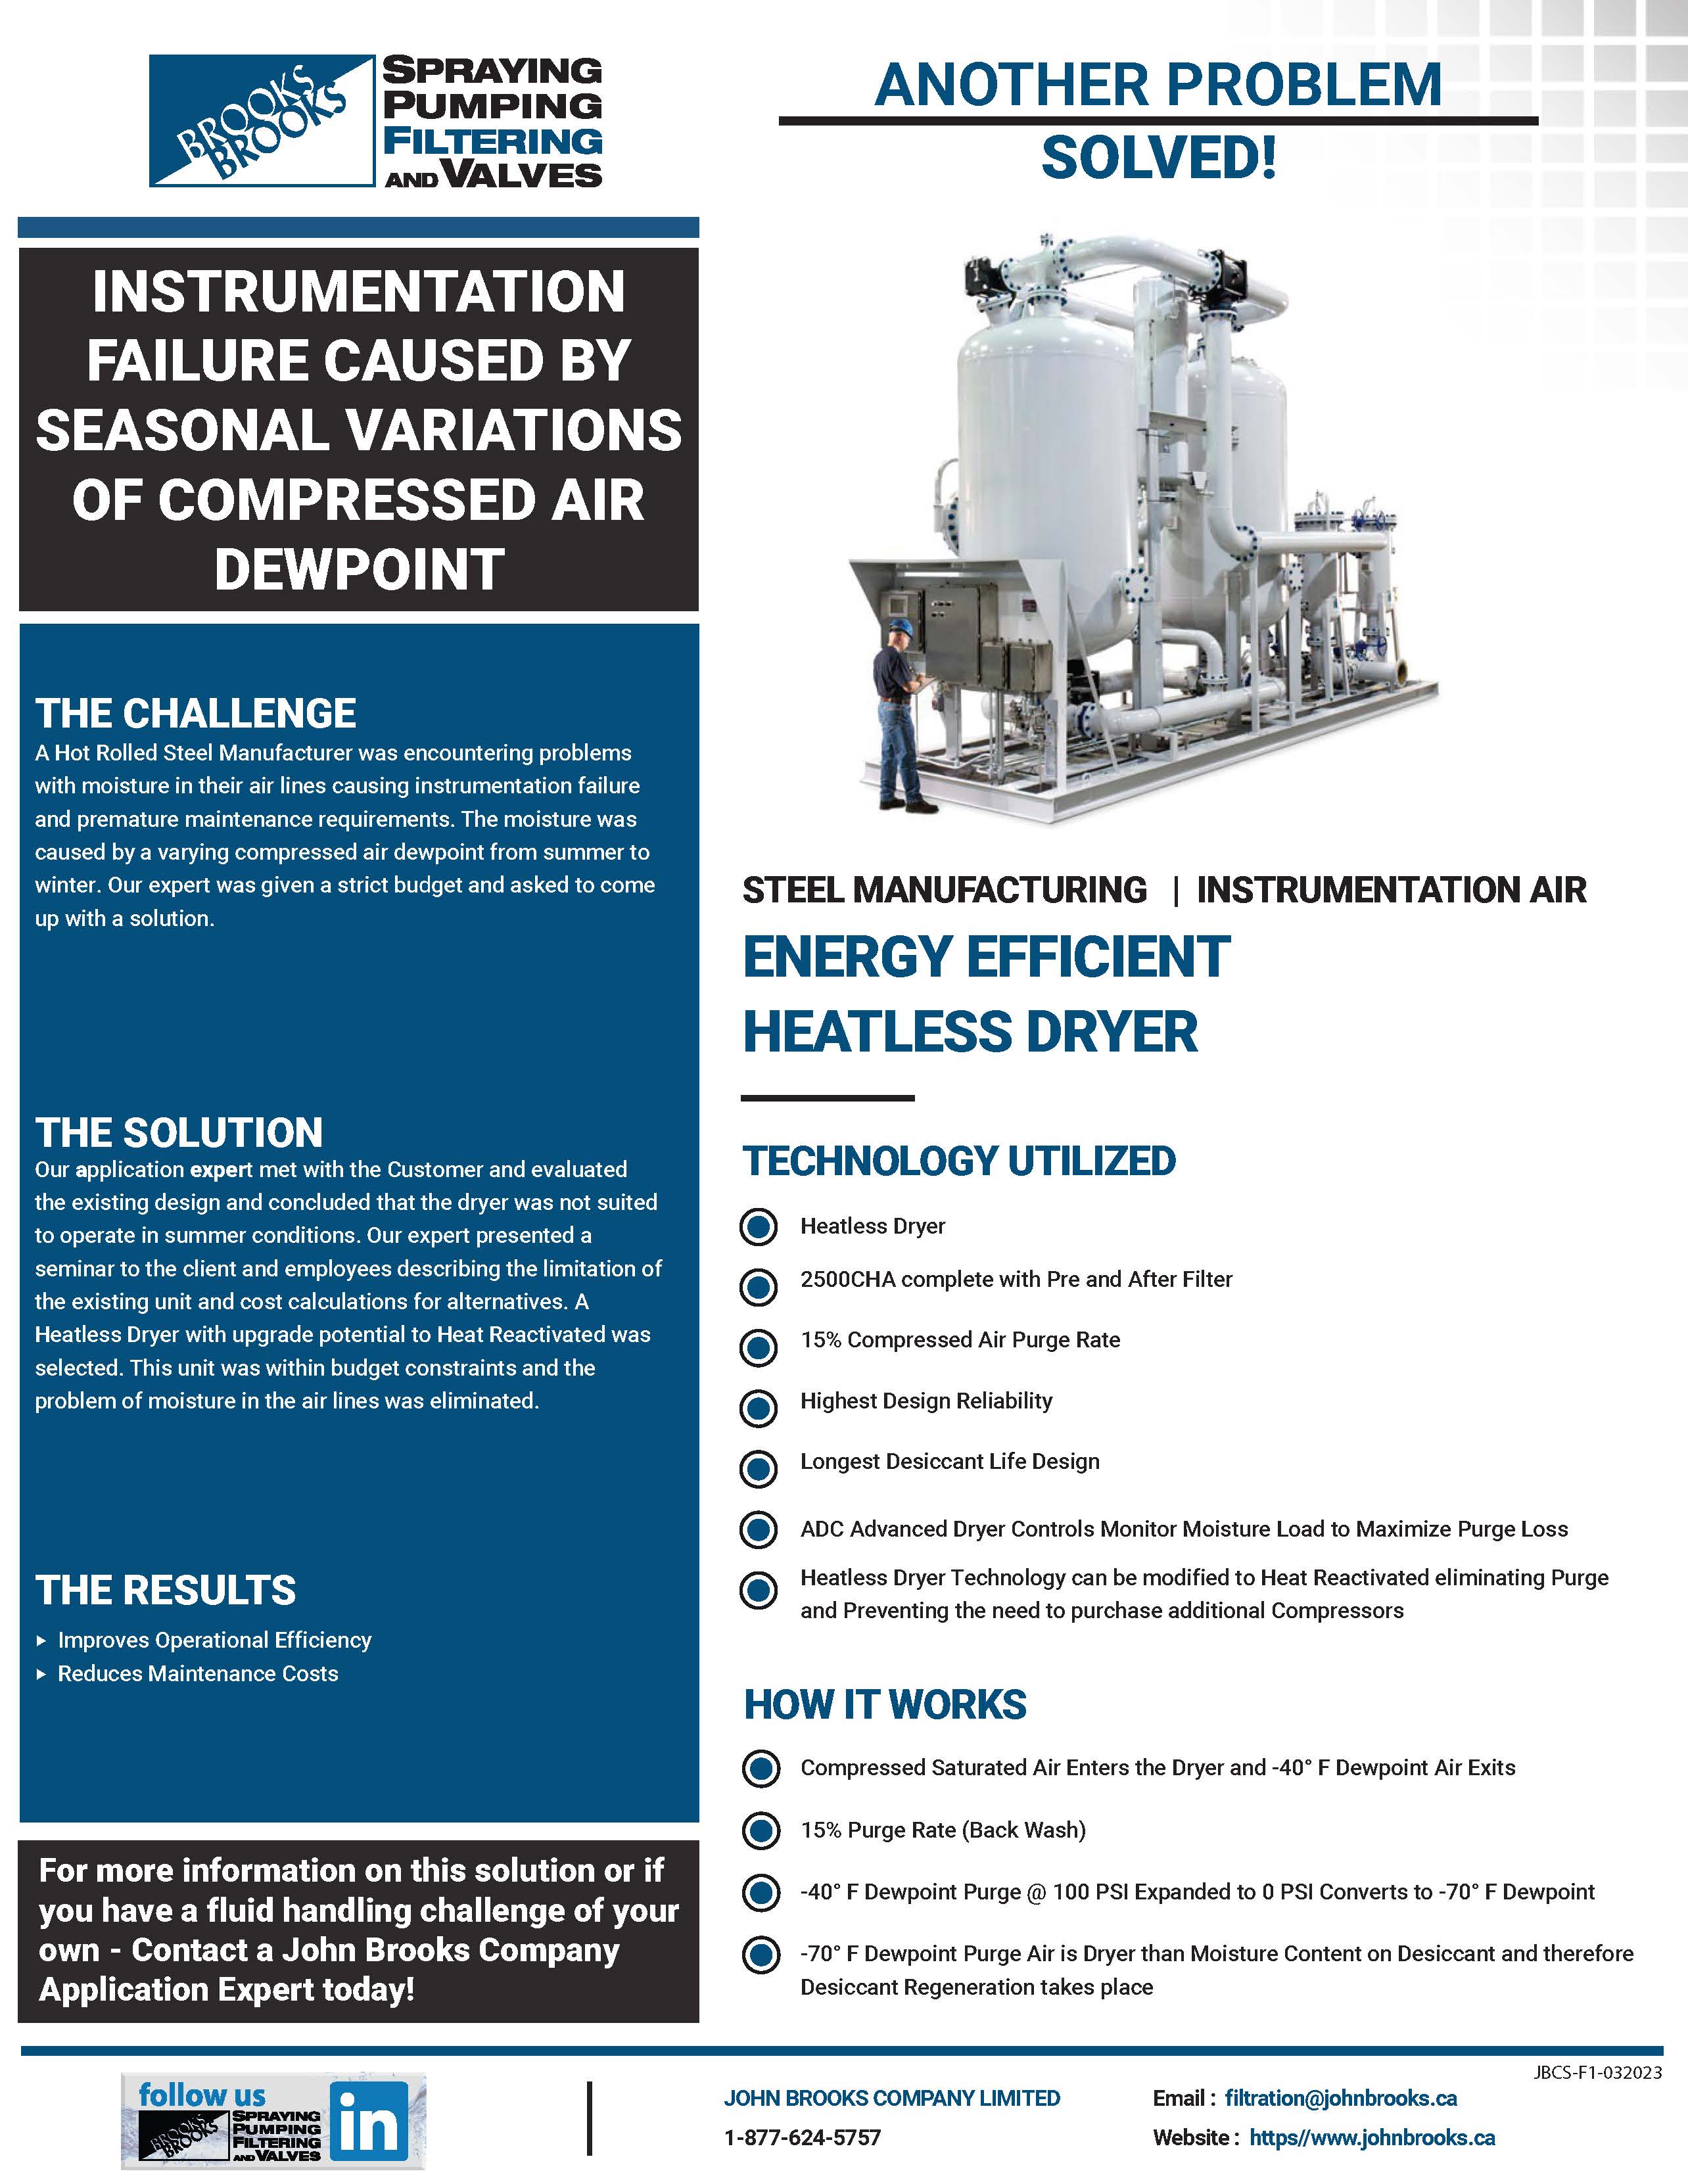 Heatless Dryer for Instrumentation Air